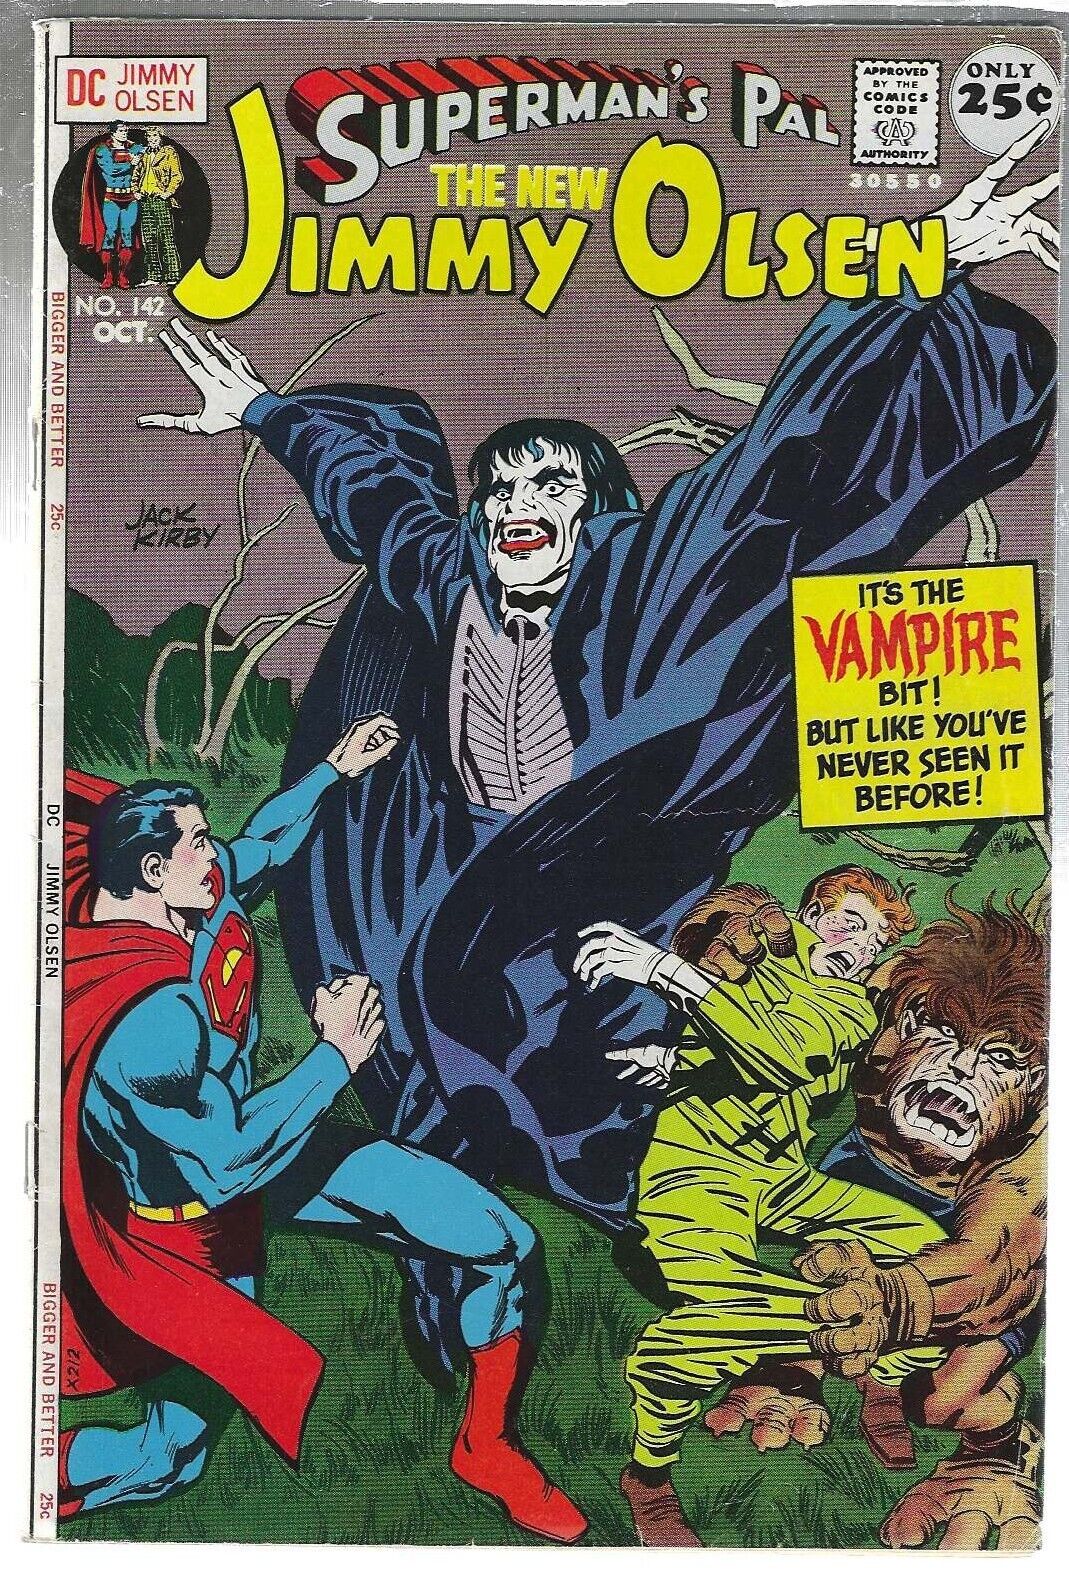 SUPERMAN'S PAL JIMMY OLSEN #142 1971 NEAL ADAMS/JACK KIRBY ART AND STORY FN/VF